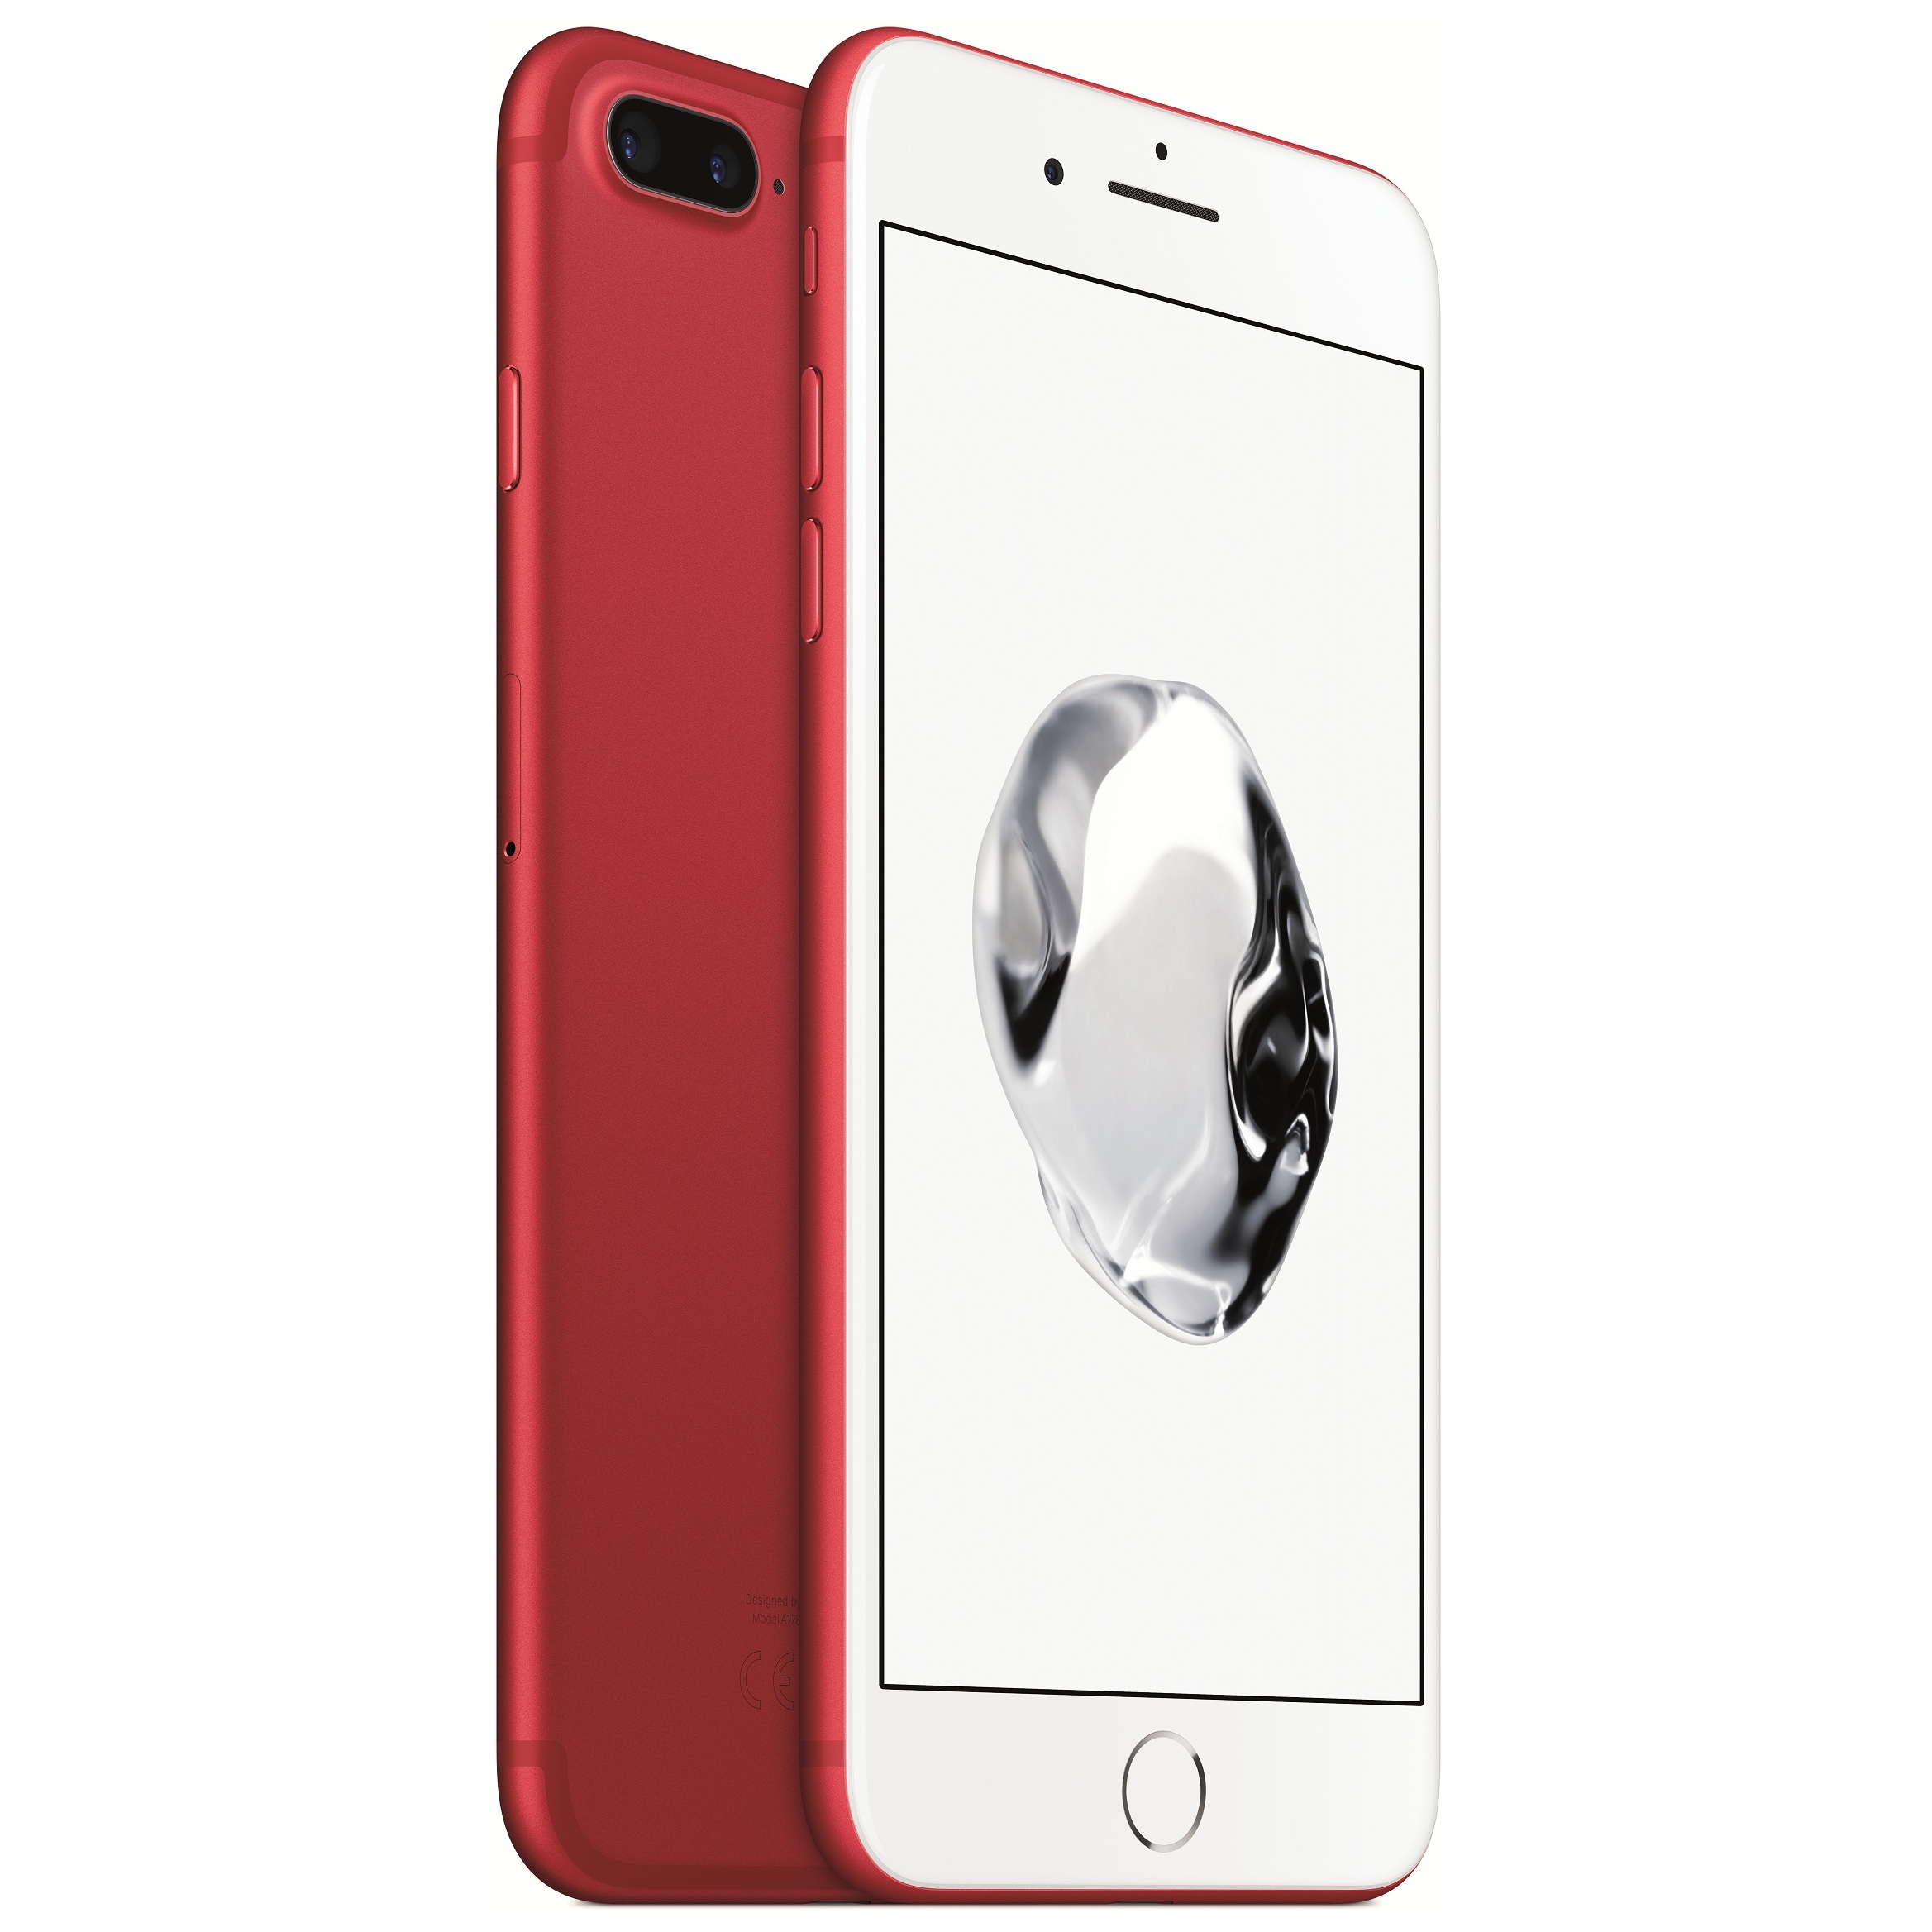 Айфон плюс 128 гб купить. Apple iphone 7 128gb Red. Apple iphone 7 Plus 128gb. Iphone 7 Plus Red. Iphone 7 Plus 128gb Red.